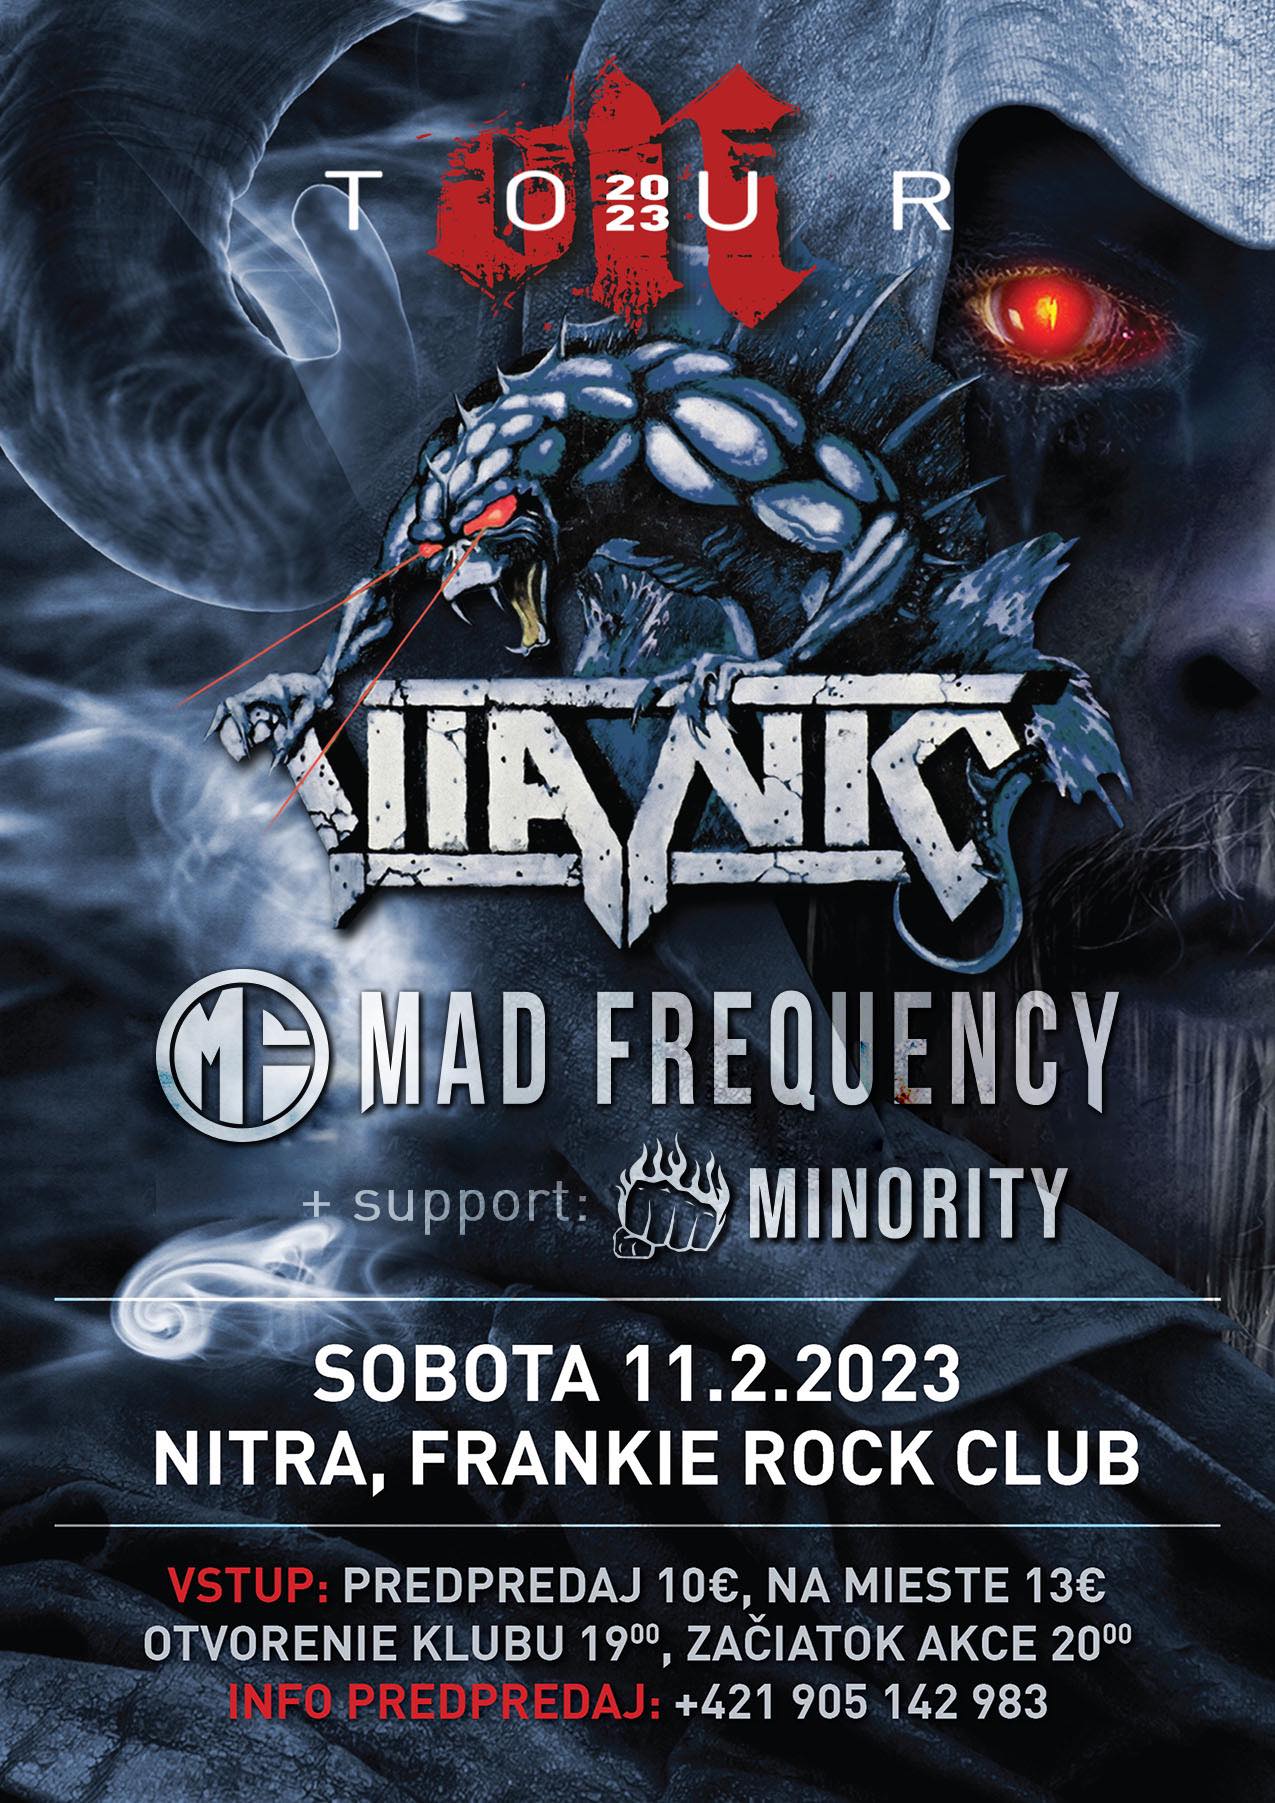 Titanic + Mad Frequency, Nitra, Frankie Rock Club